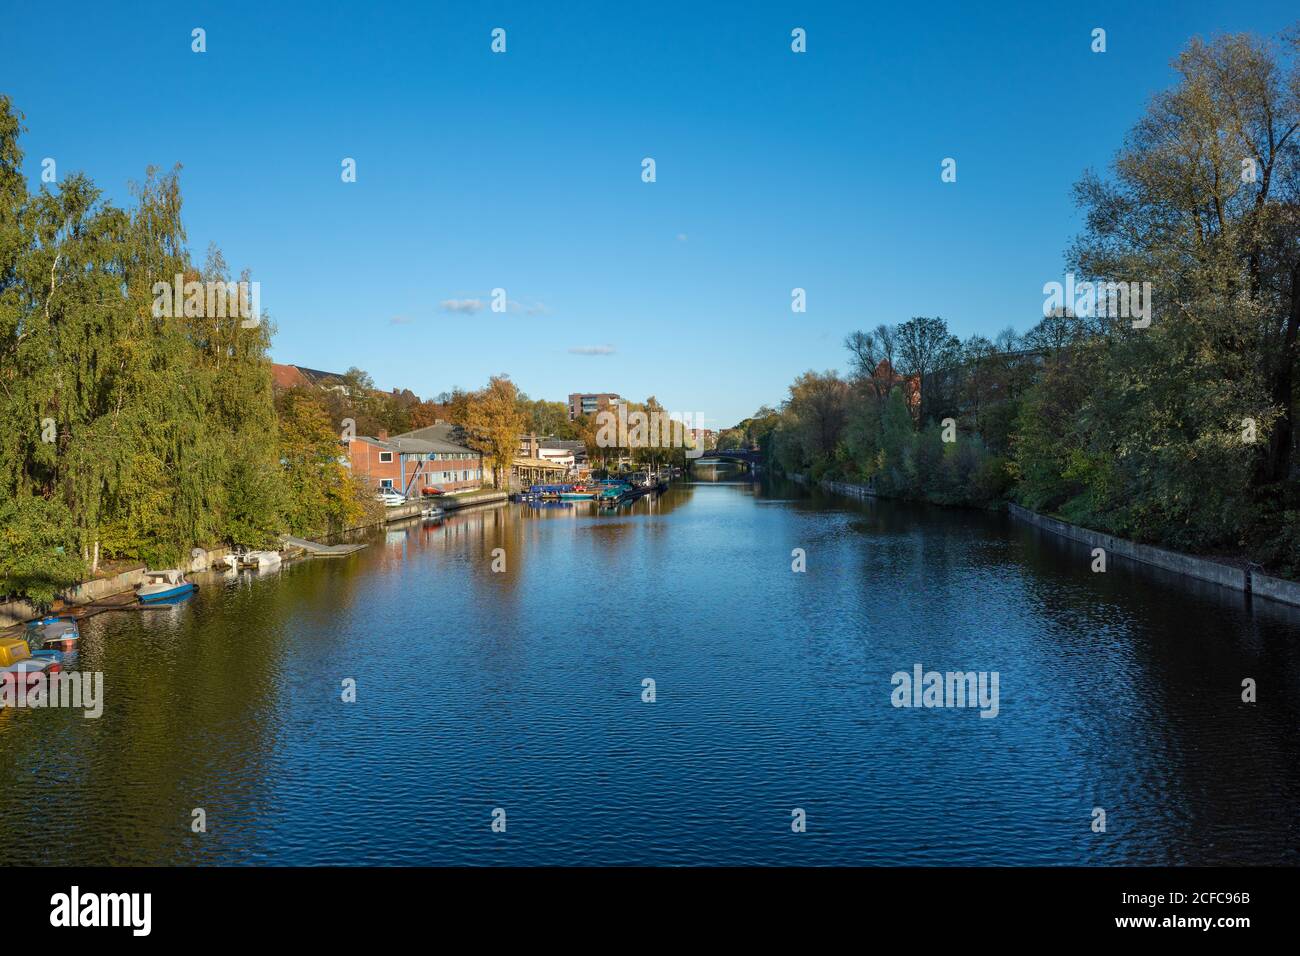 Blick vom Großheidesteg auf den Osterbek-Kanal, Hamburg Winterhude, Deutschland - 29. November 2019. Stockfoto